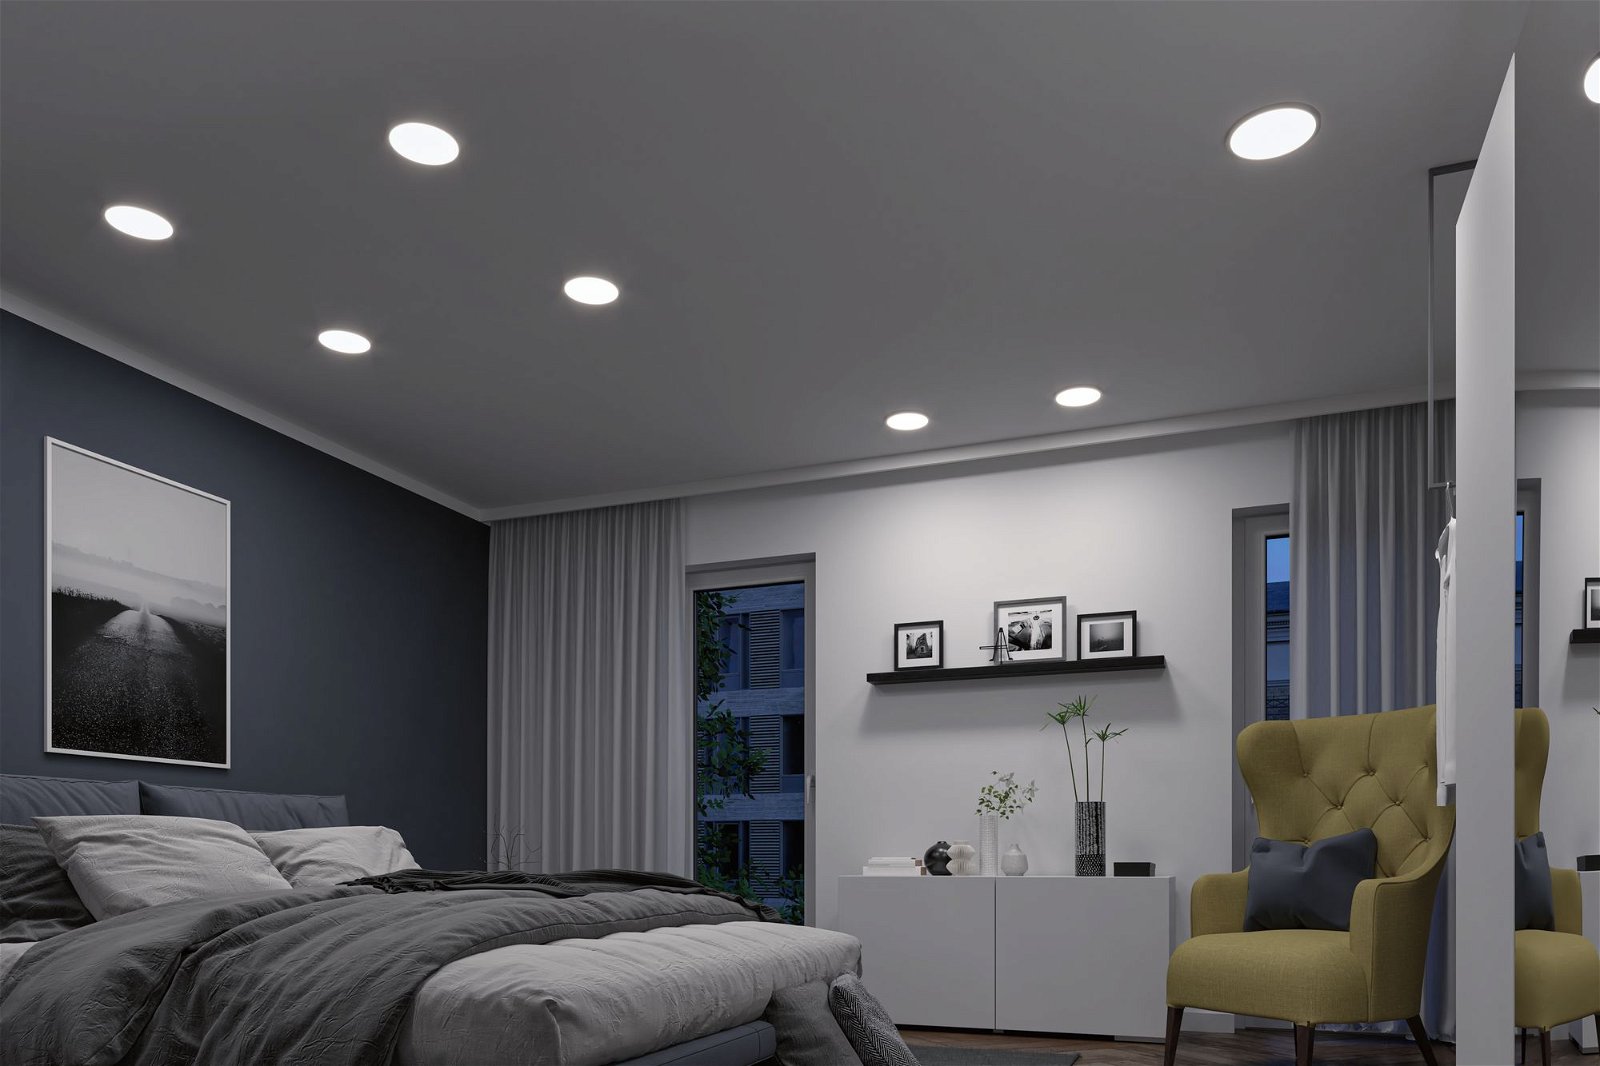 VariFit LED-inbouwpaneel Smart Home Zigbee Areo IP44 rond 230mm 16W 1400lm Tunable White Chroom mat dimbaar